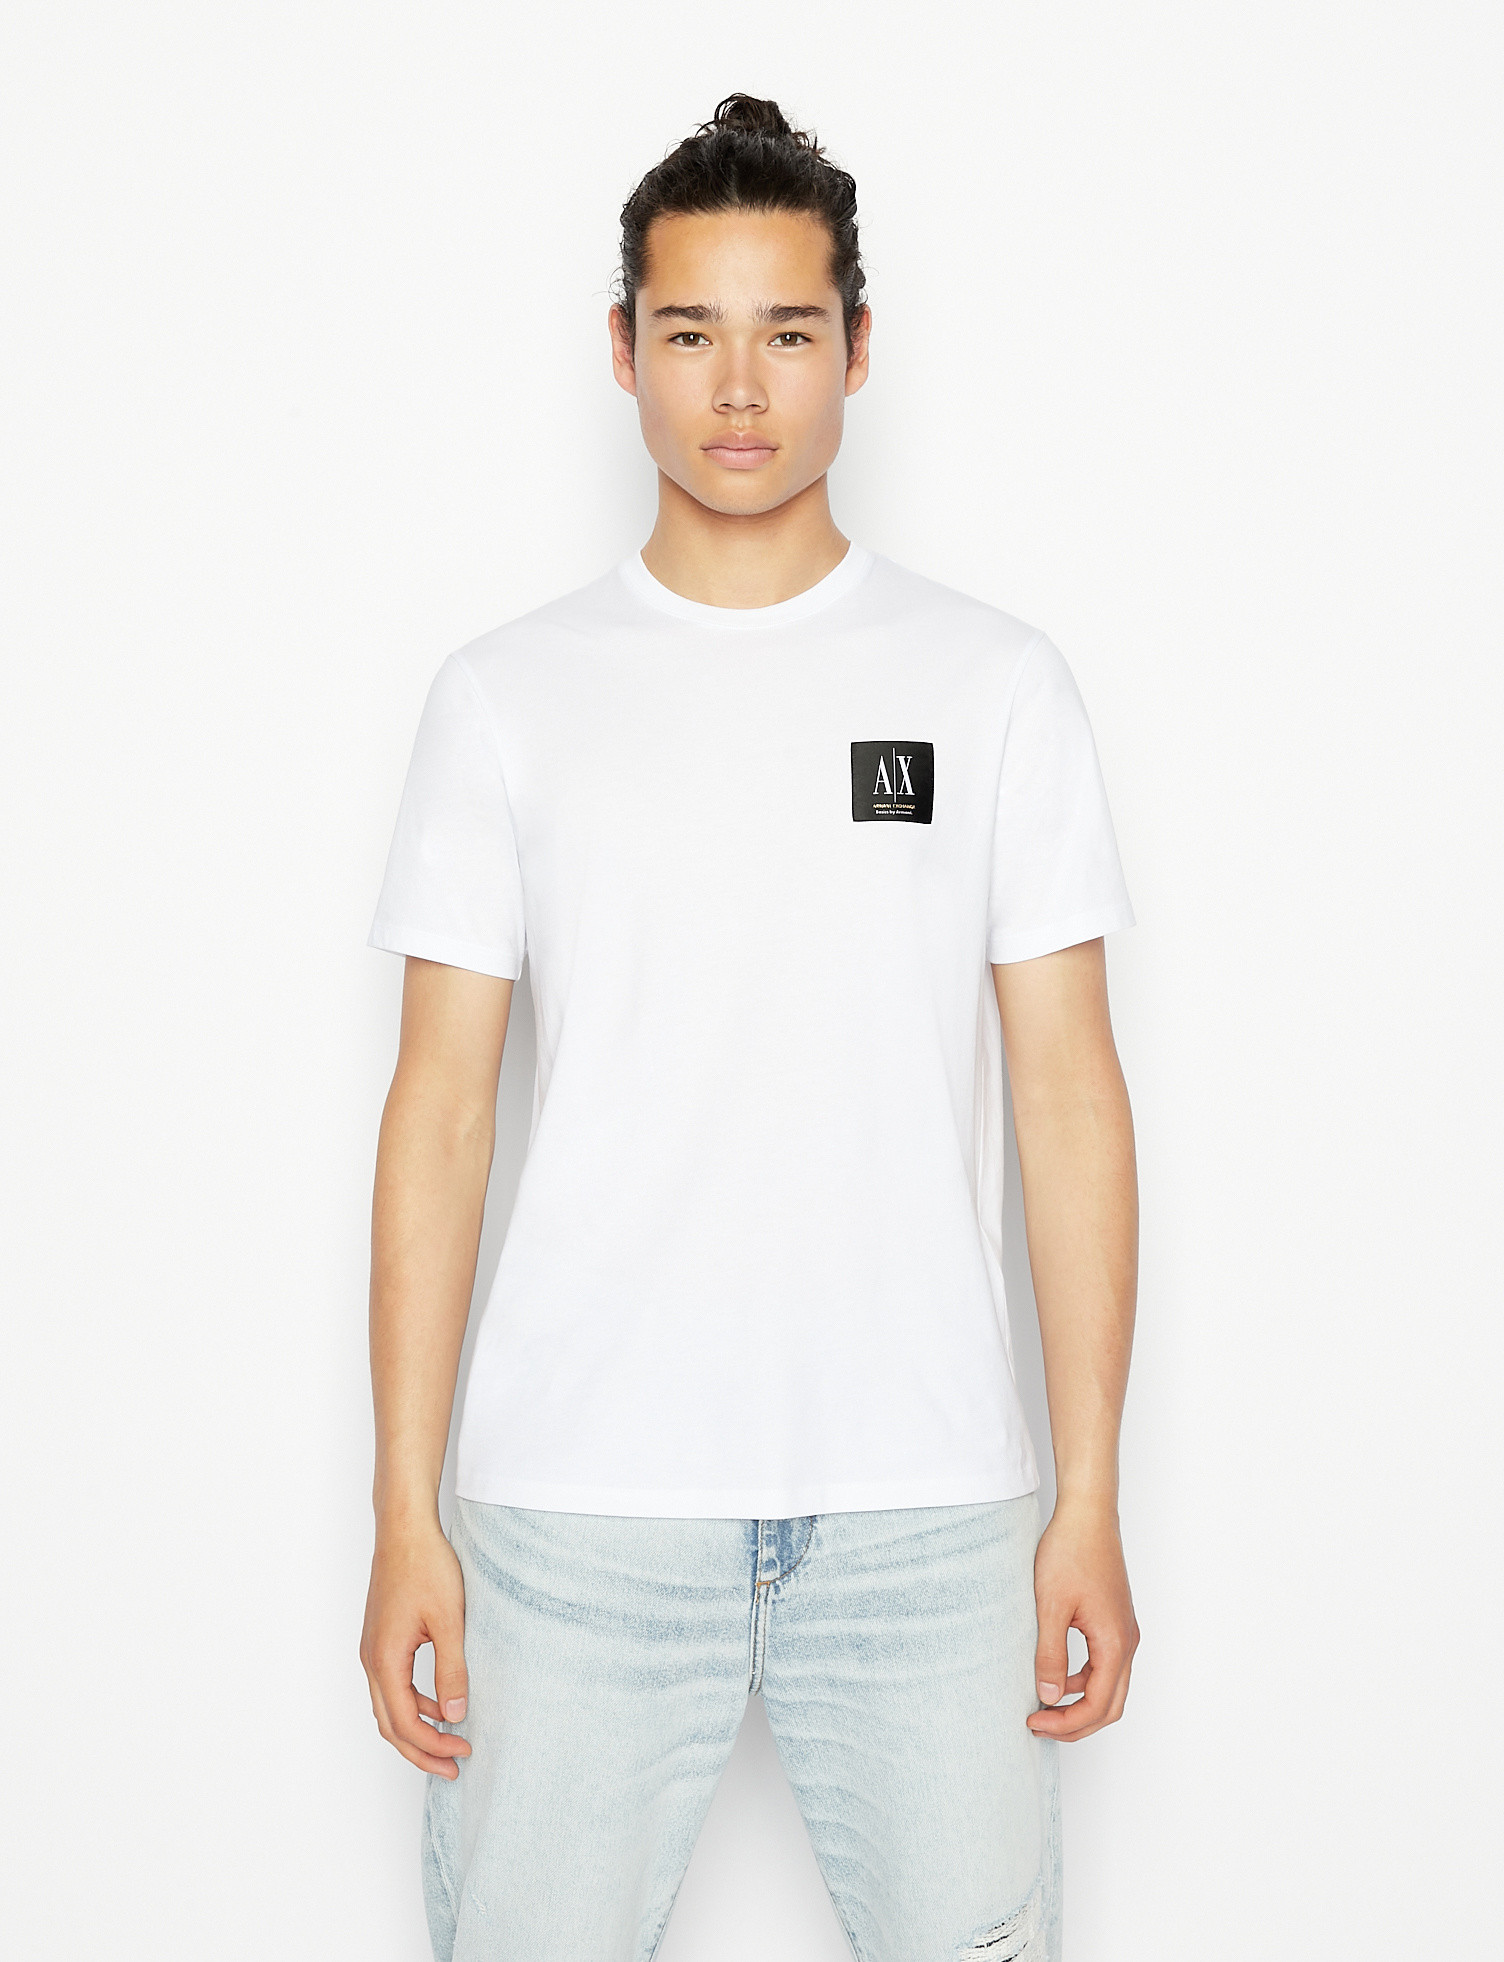 Armani Exchange - Regular fit T-shirt in organic cotton with logo, White, large image number 3